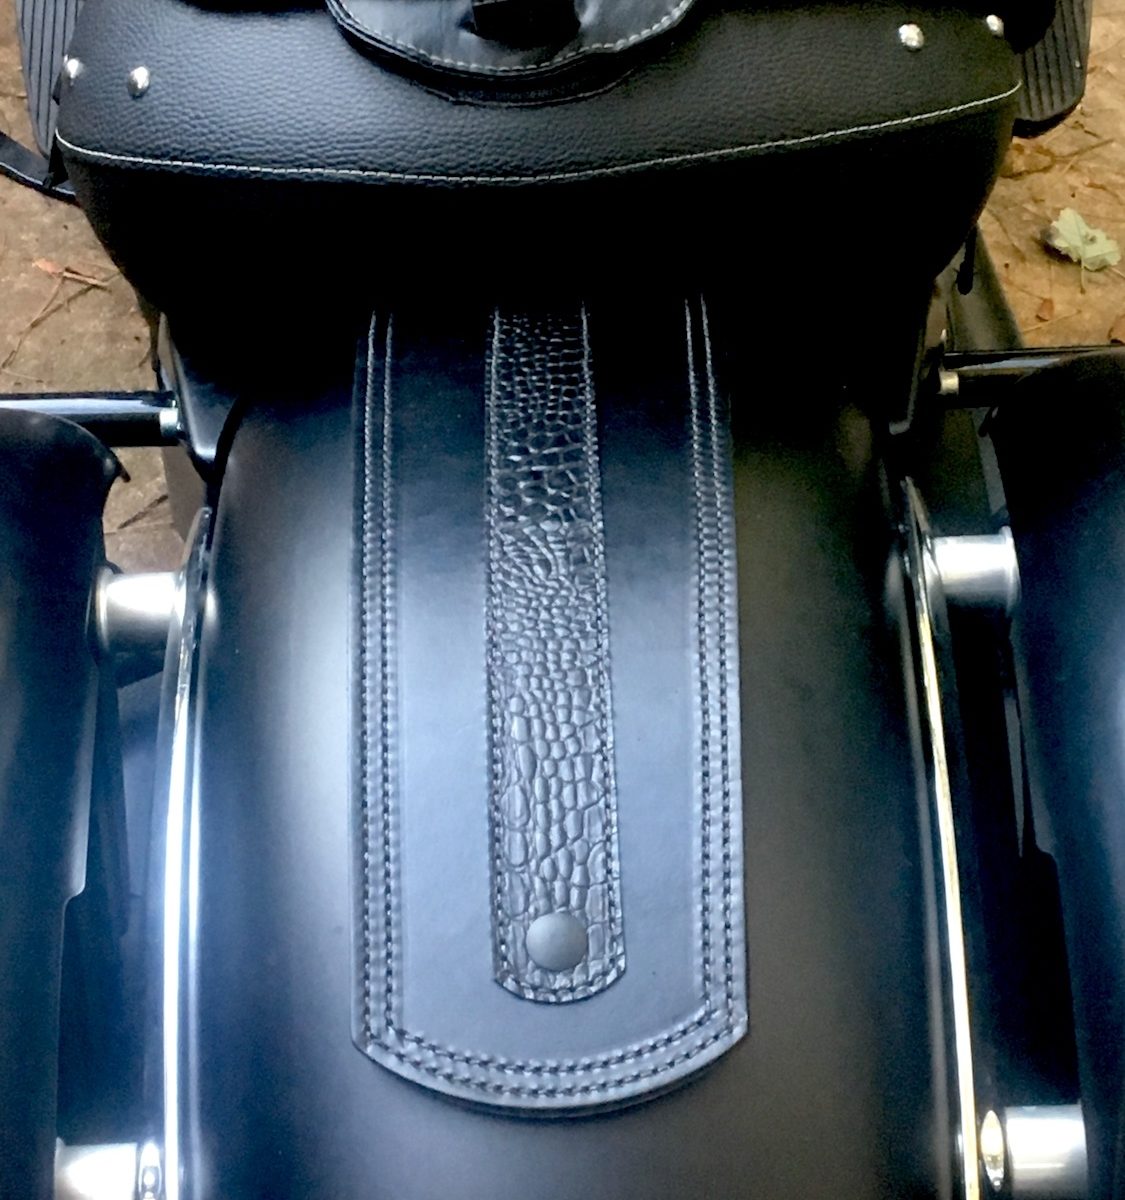 Indian Fender Bib with black alligator embossed leather